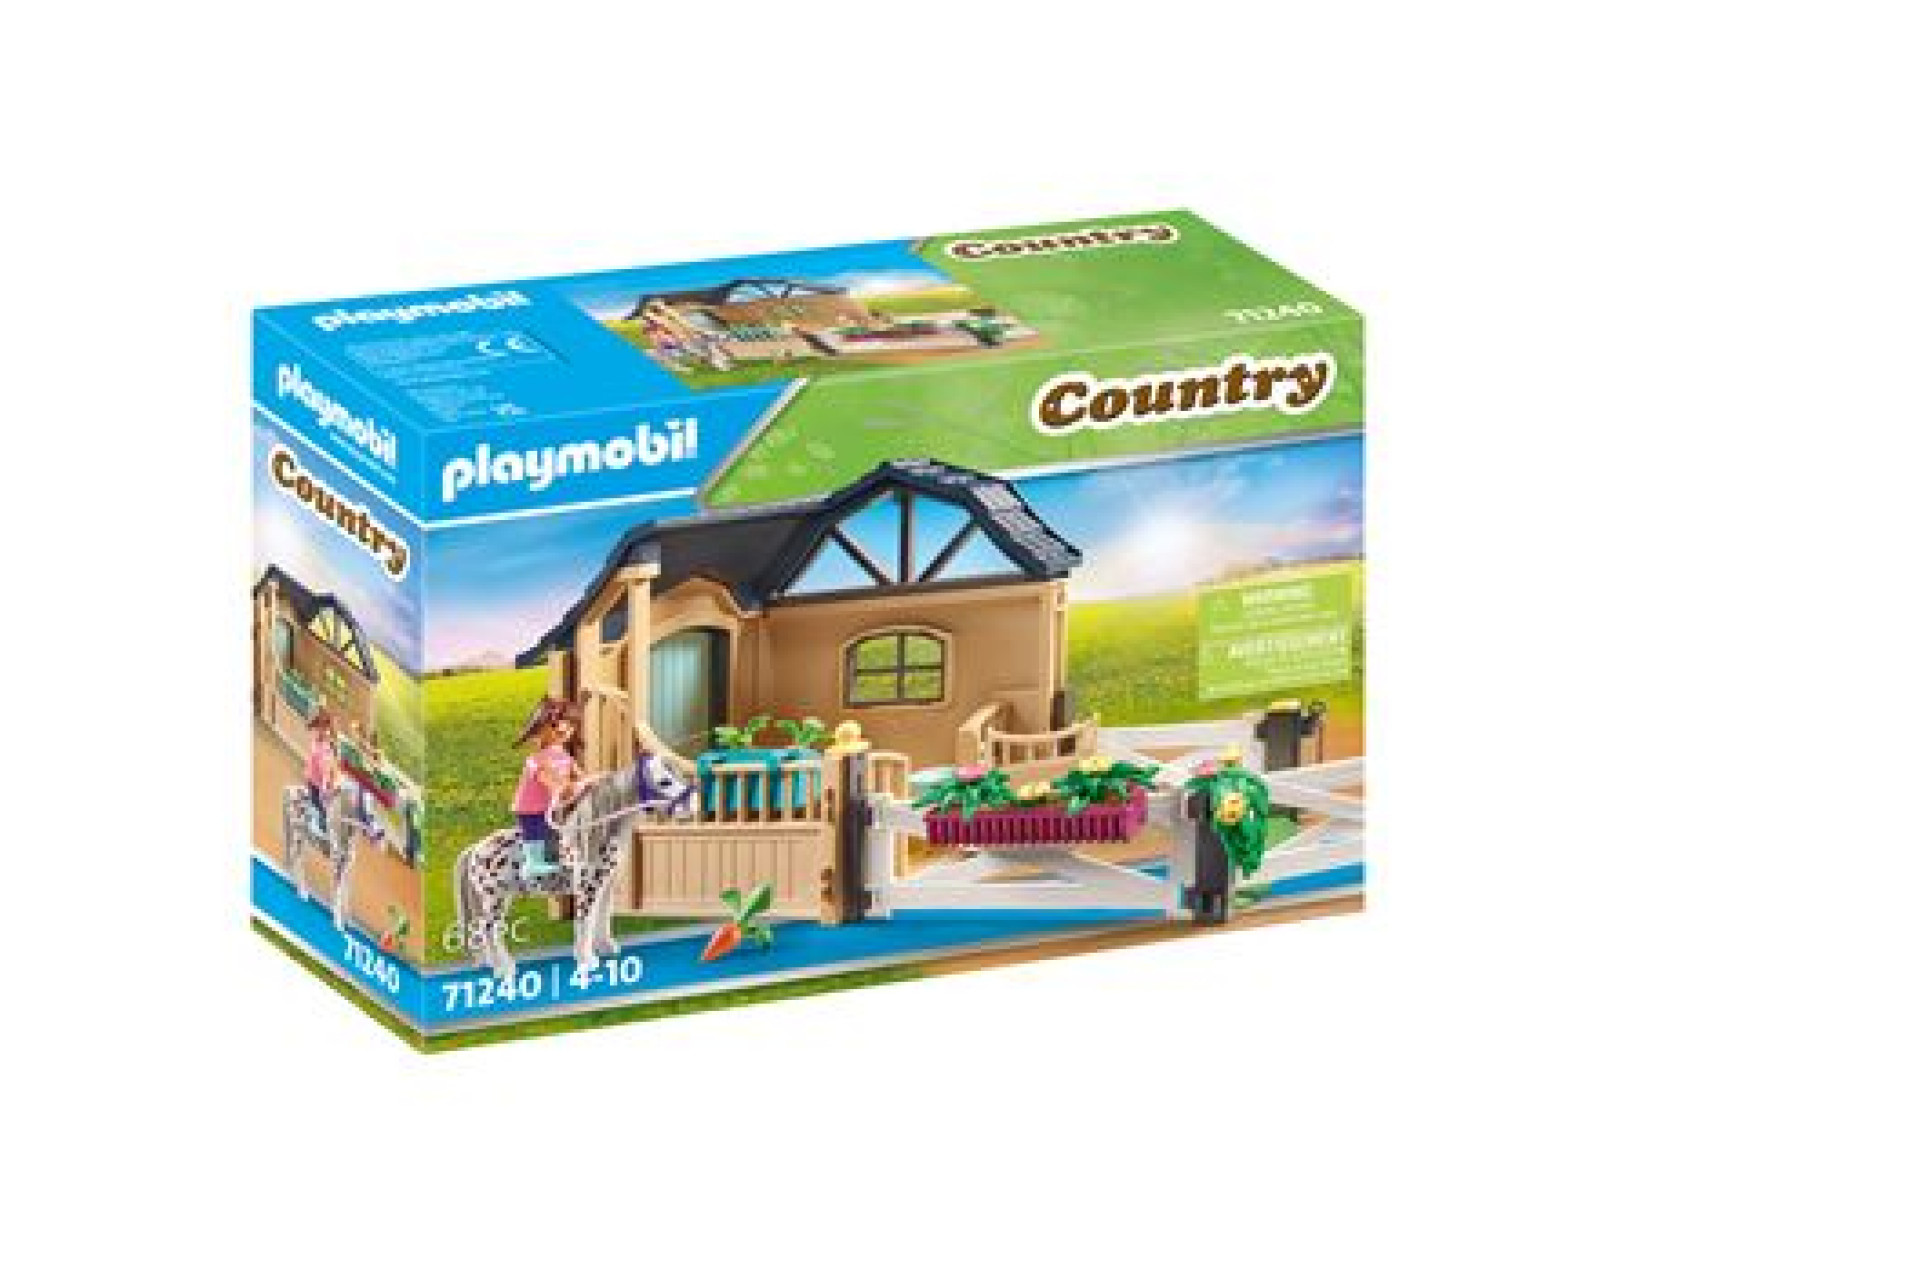 Acheter Playmobil Country 71240 Extension Box avec cheval